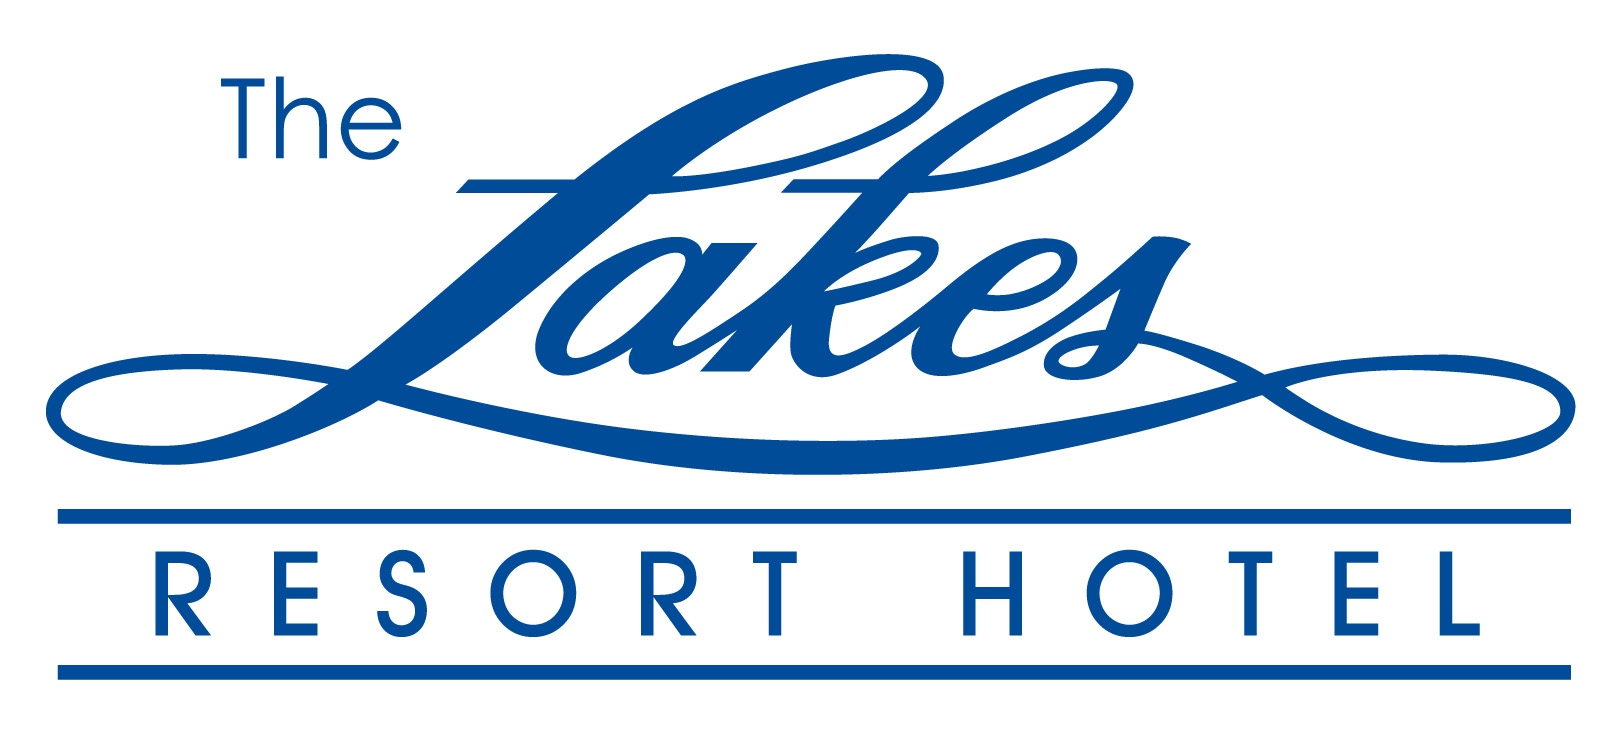 Lakes Resort Hotel - Accommodation Port Hedland